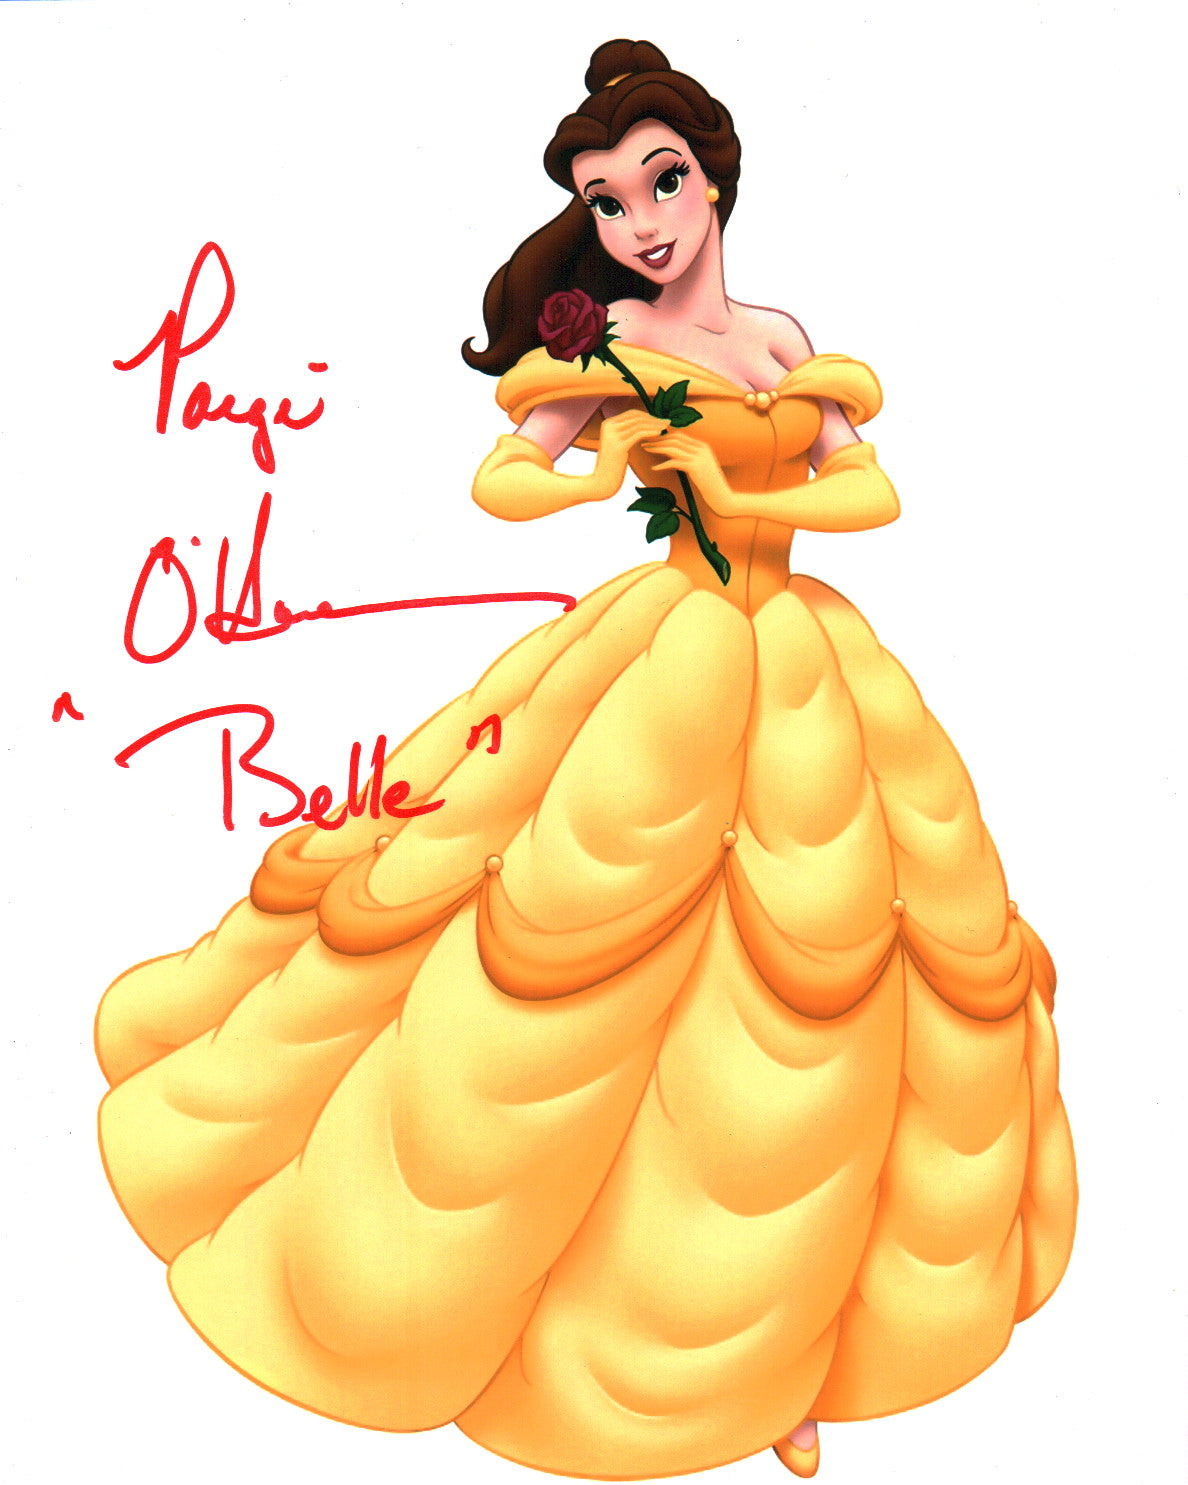 Paige O'Hara Disney Beauty and the Beast 8x10 Signed Photo JSA Certified Autograph